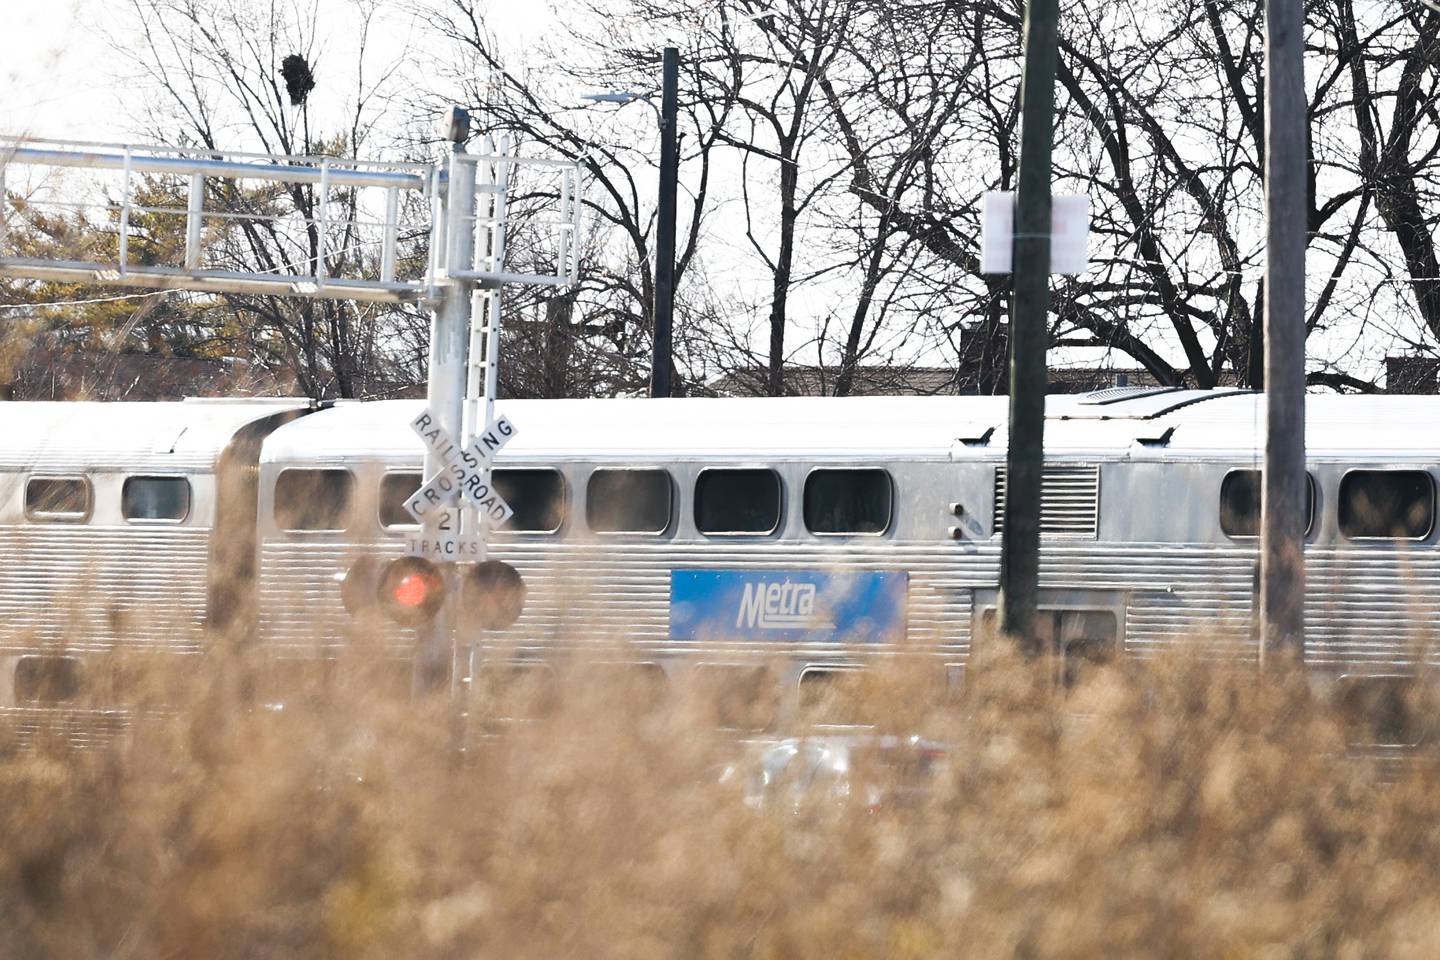 A Metra train passes through a railroad crossing.